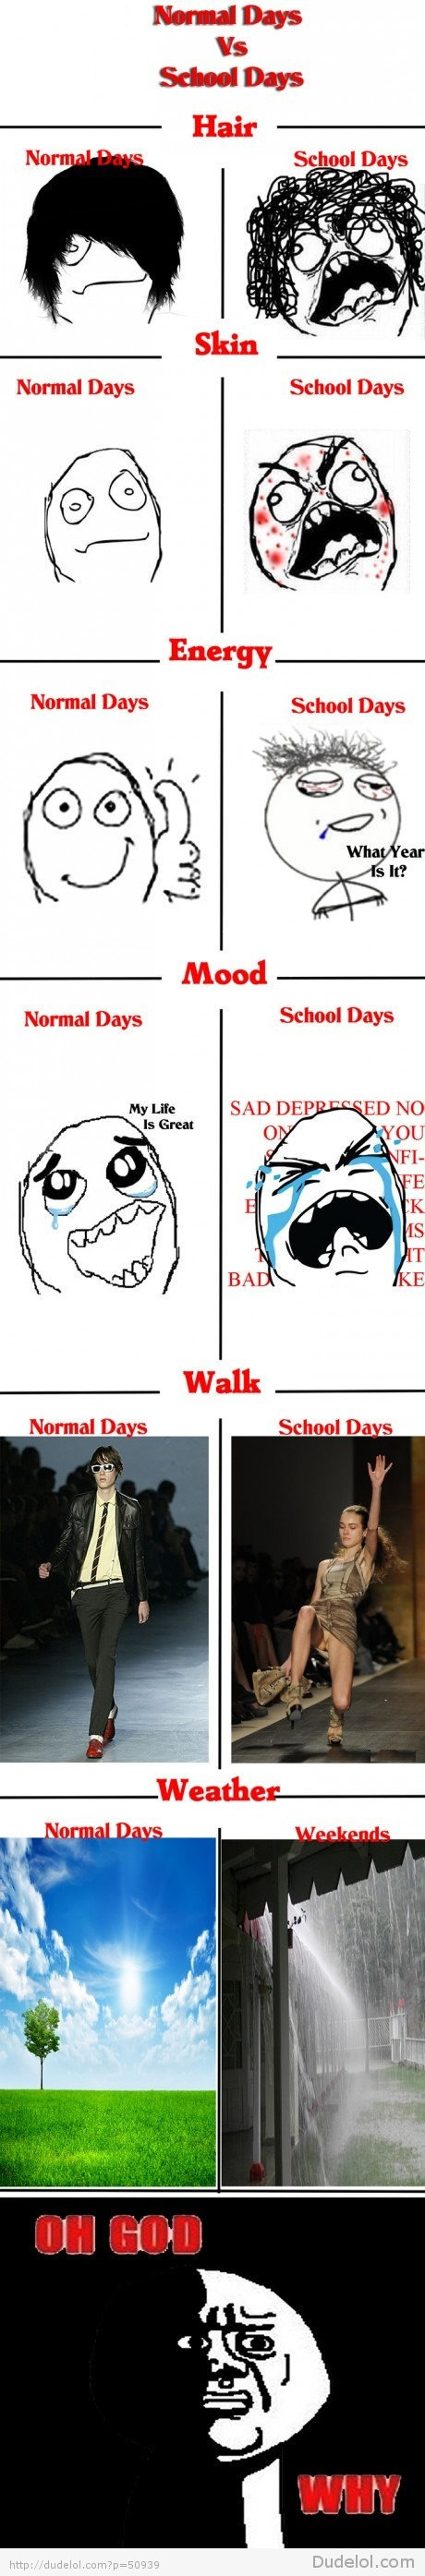 normal_days_vs_school_days89616.jpg